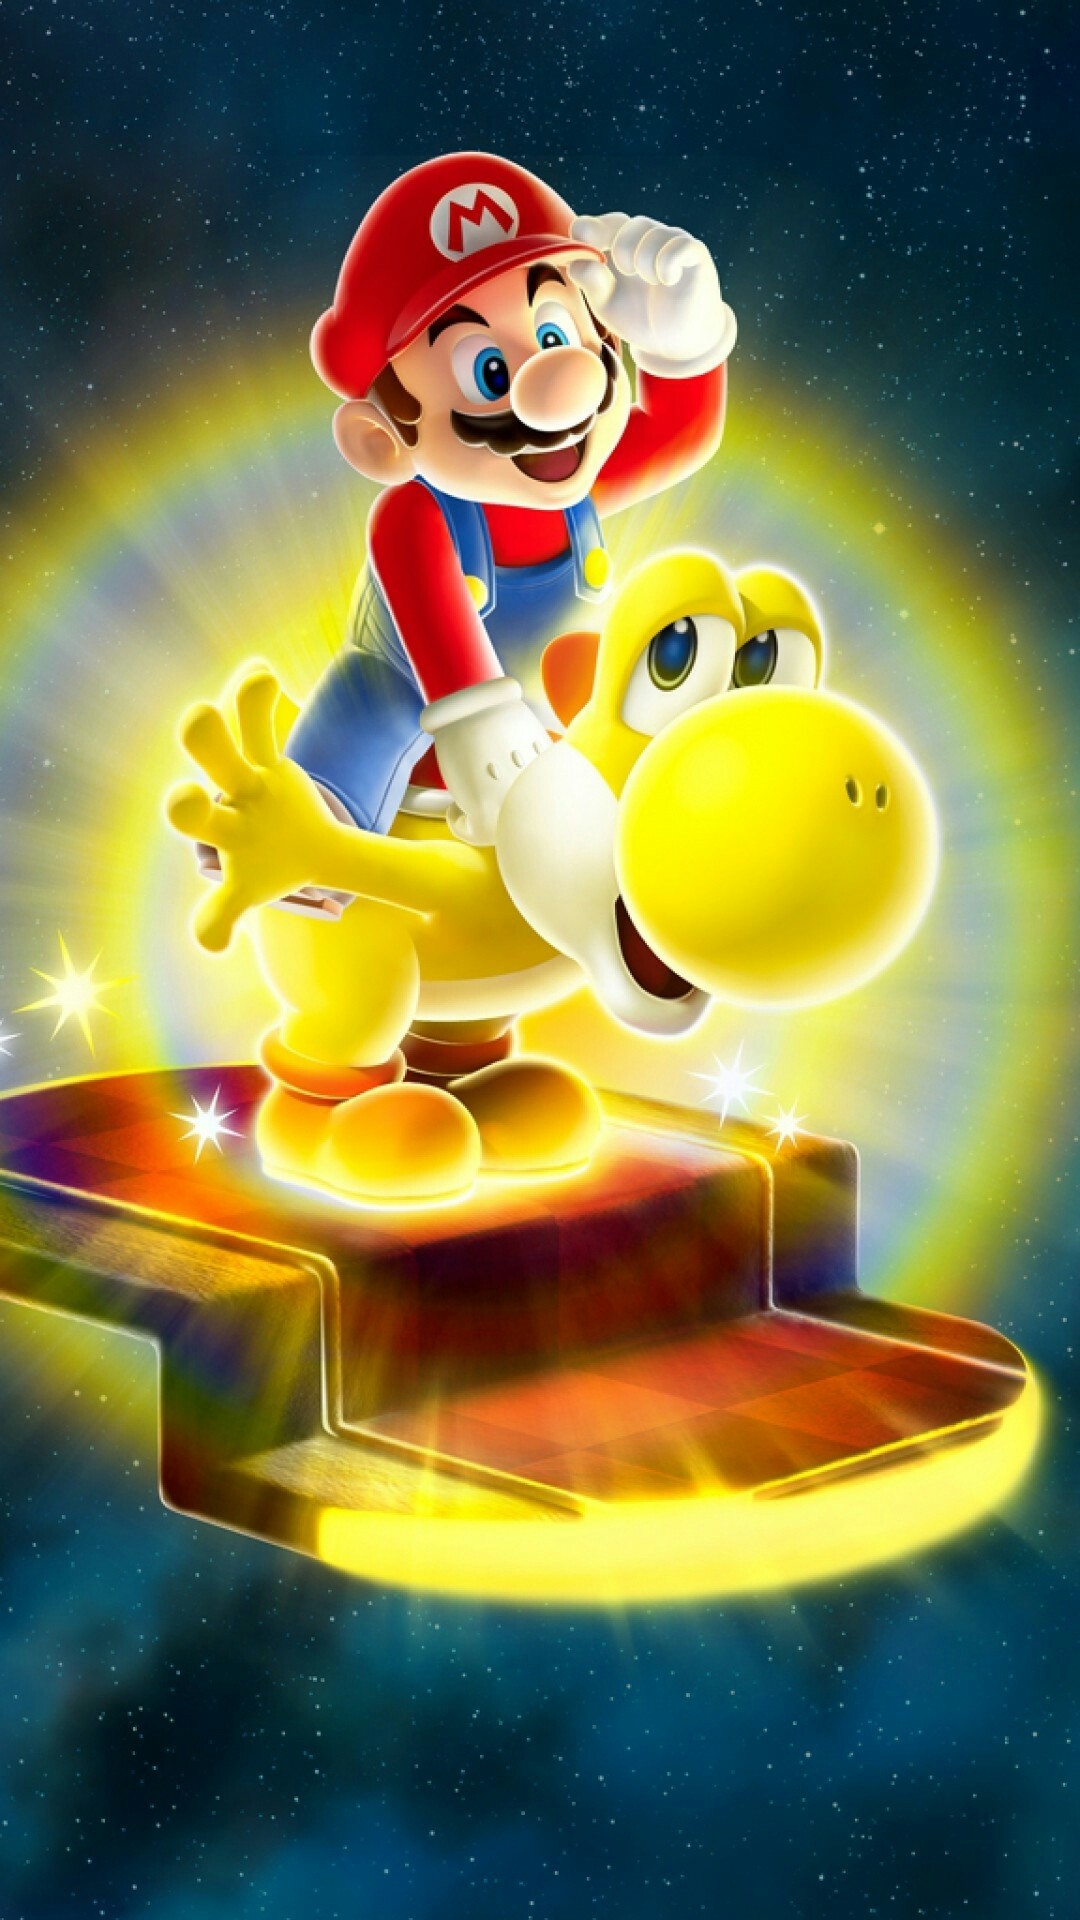 1080x1920 Mario and Yoshi Wallpaper